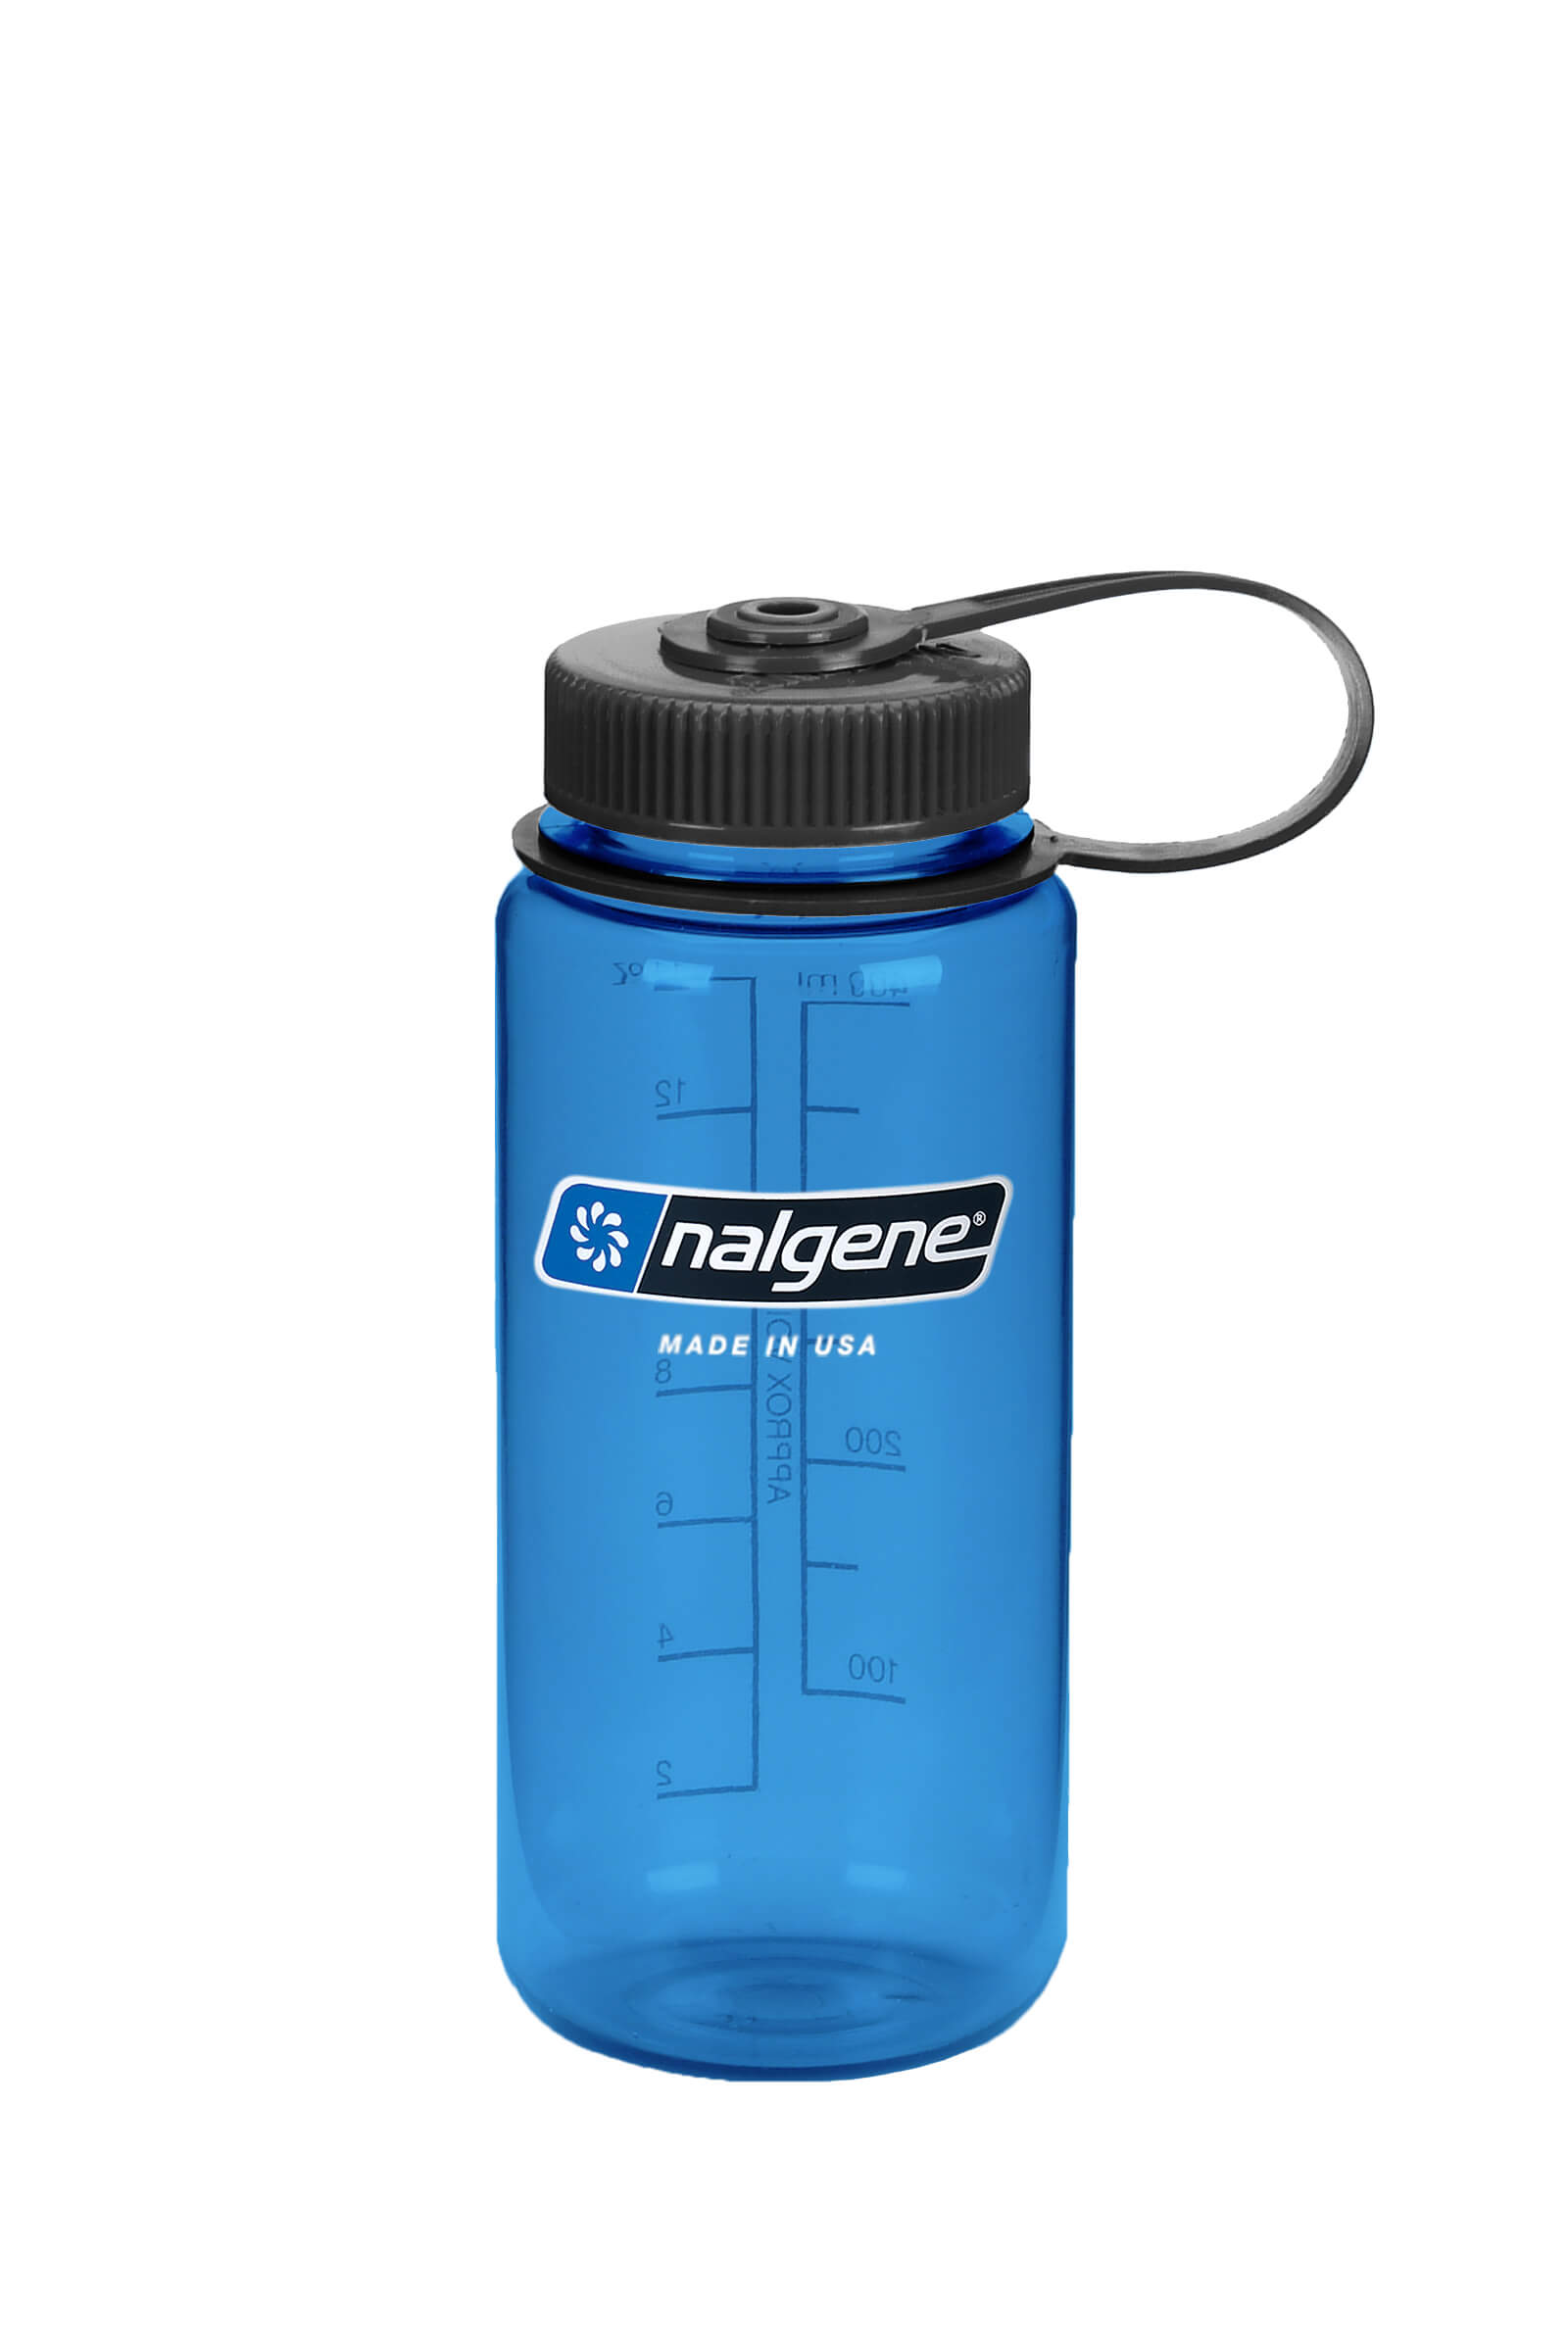 Nalgene Tritan Narrow Mouth BPA-Free Water Bottle Lid Blue 